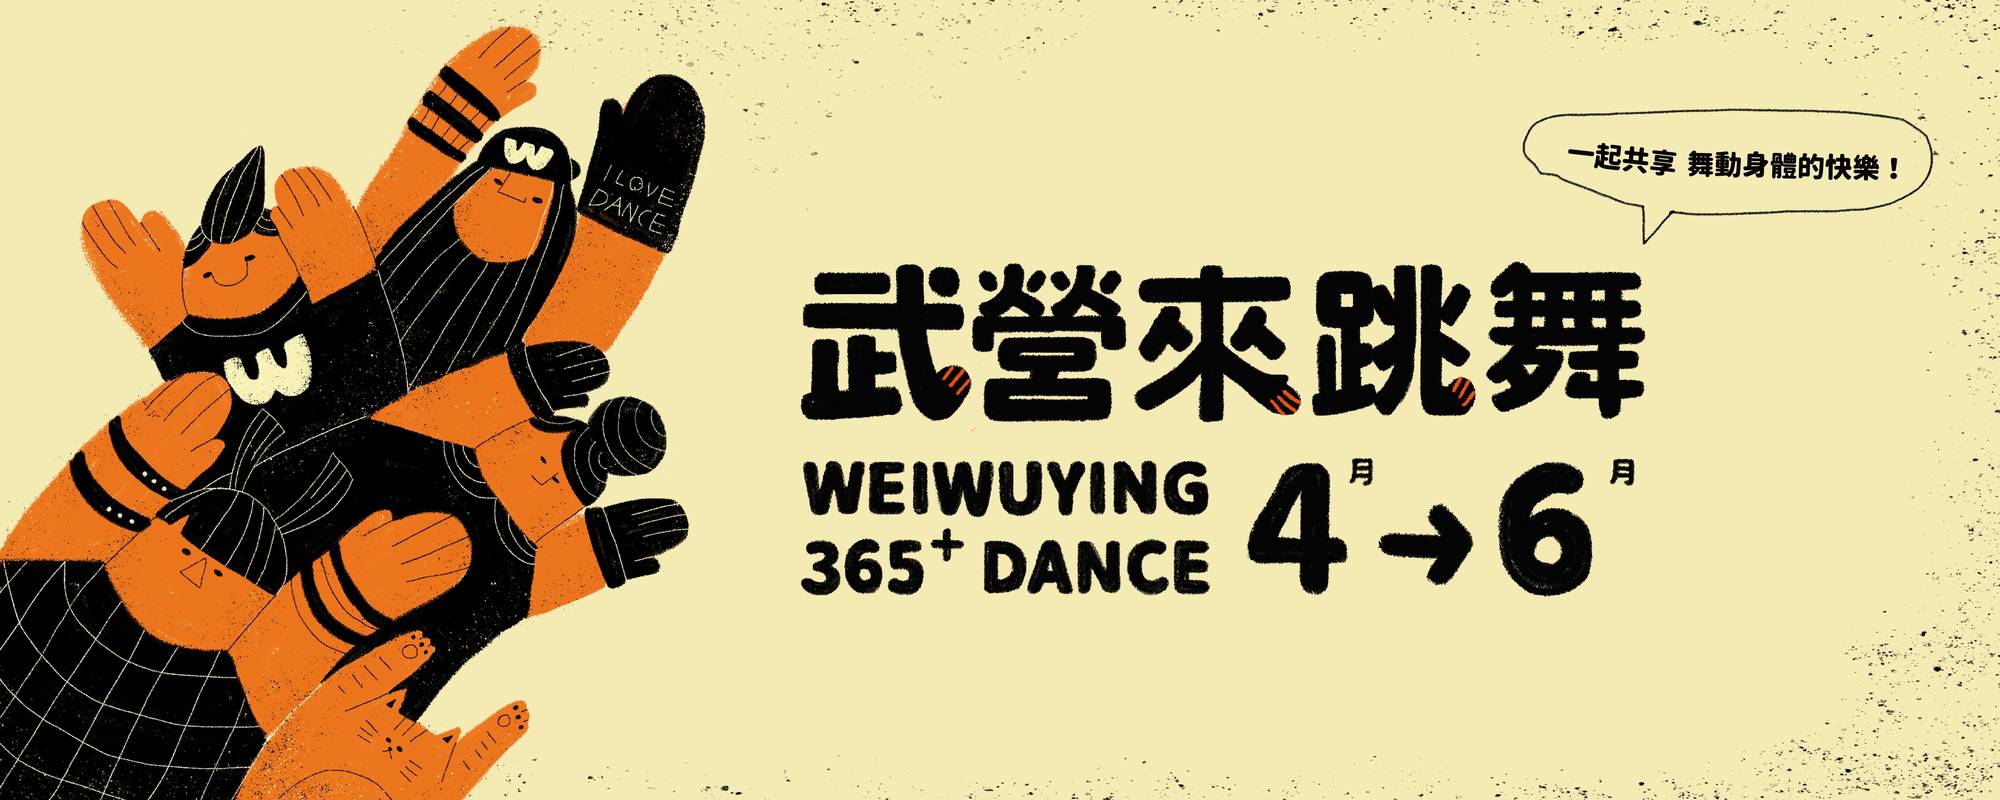 2021 Weiwuying 365+ Dance